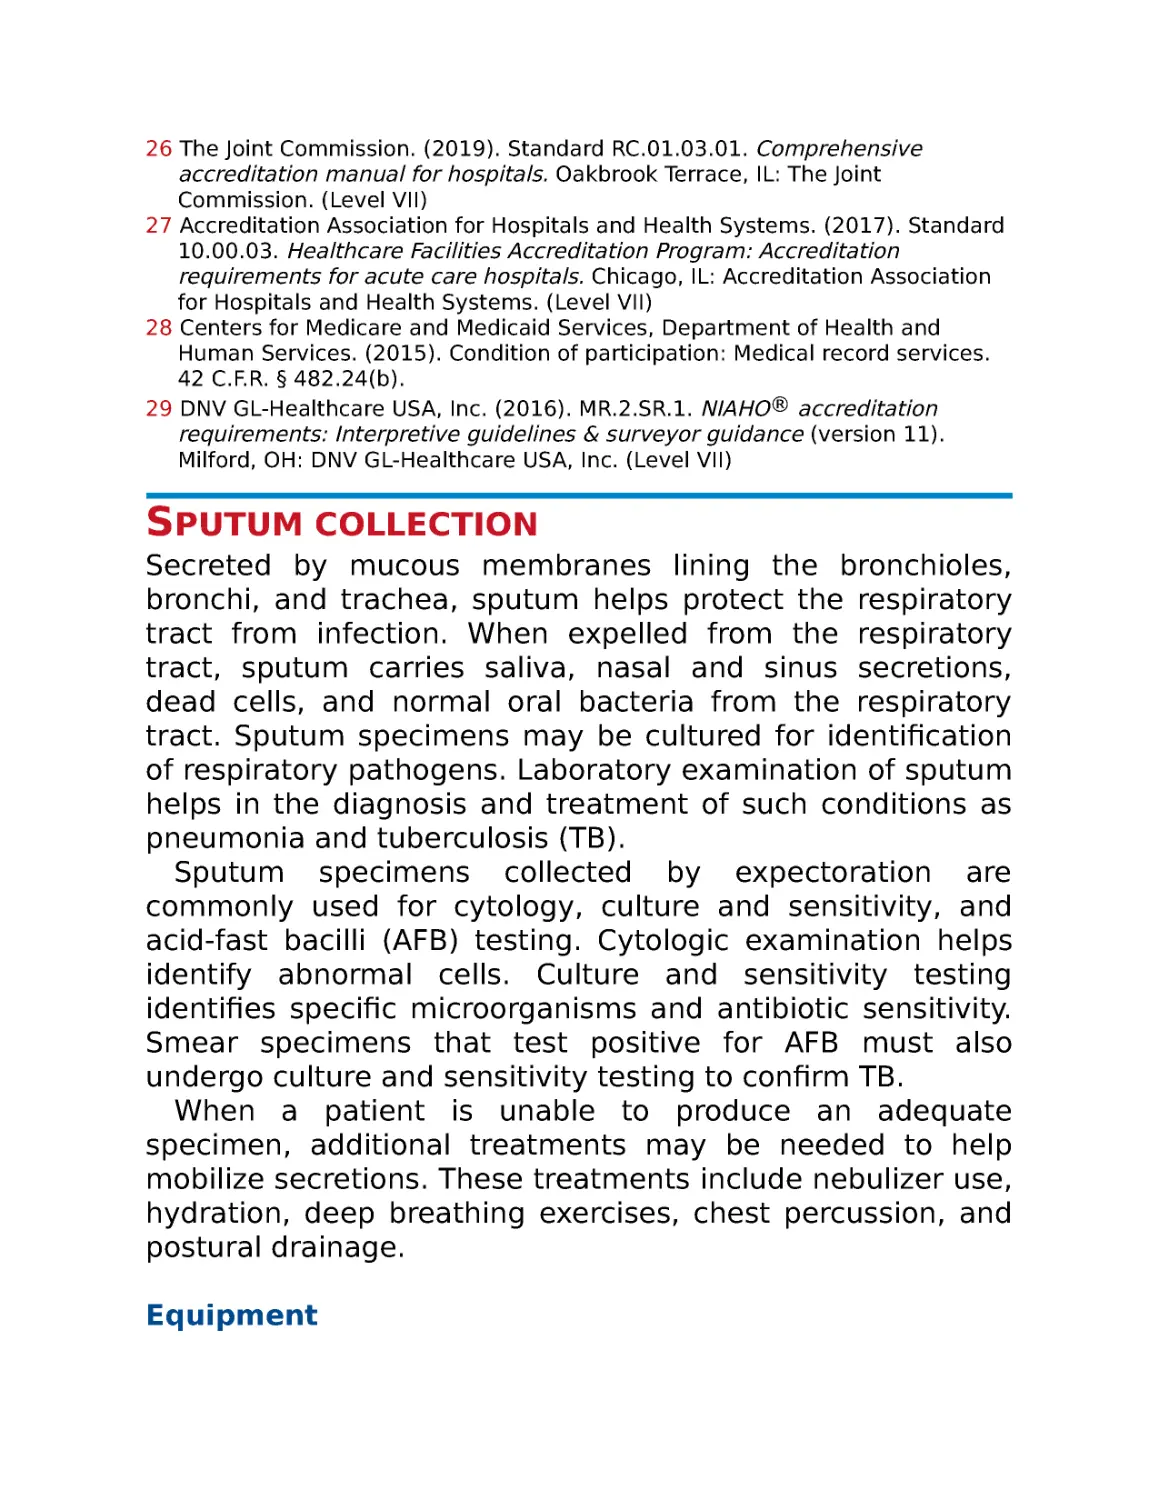 Sputum collection